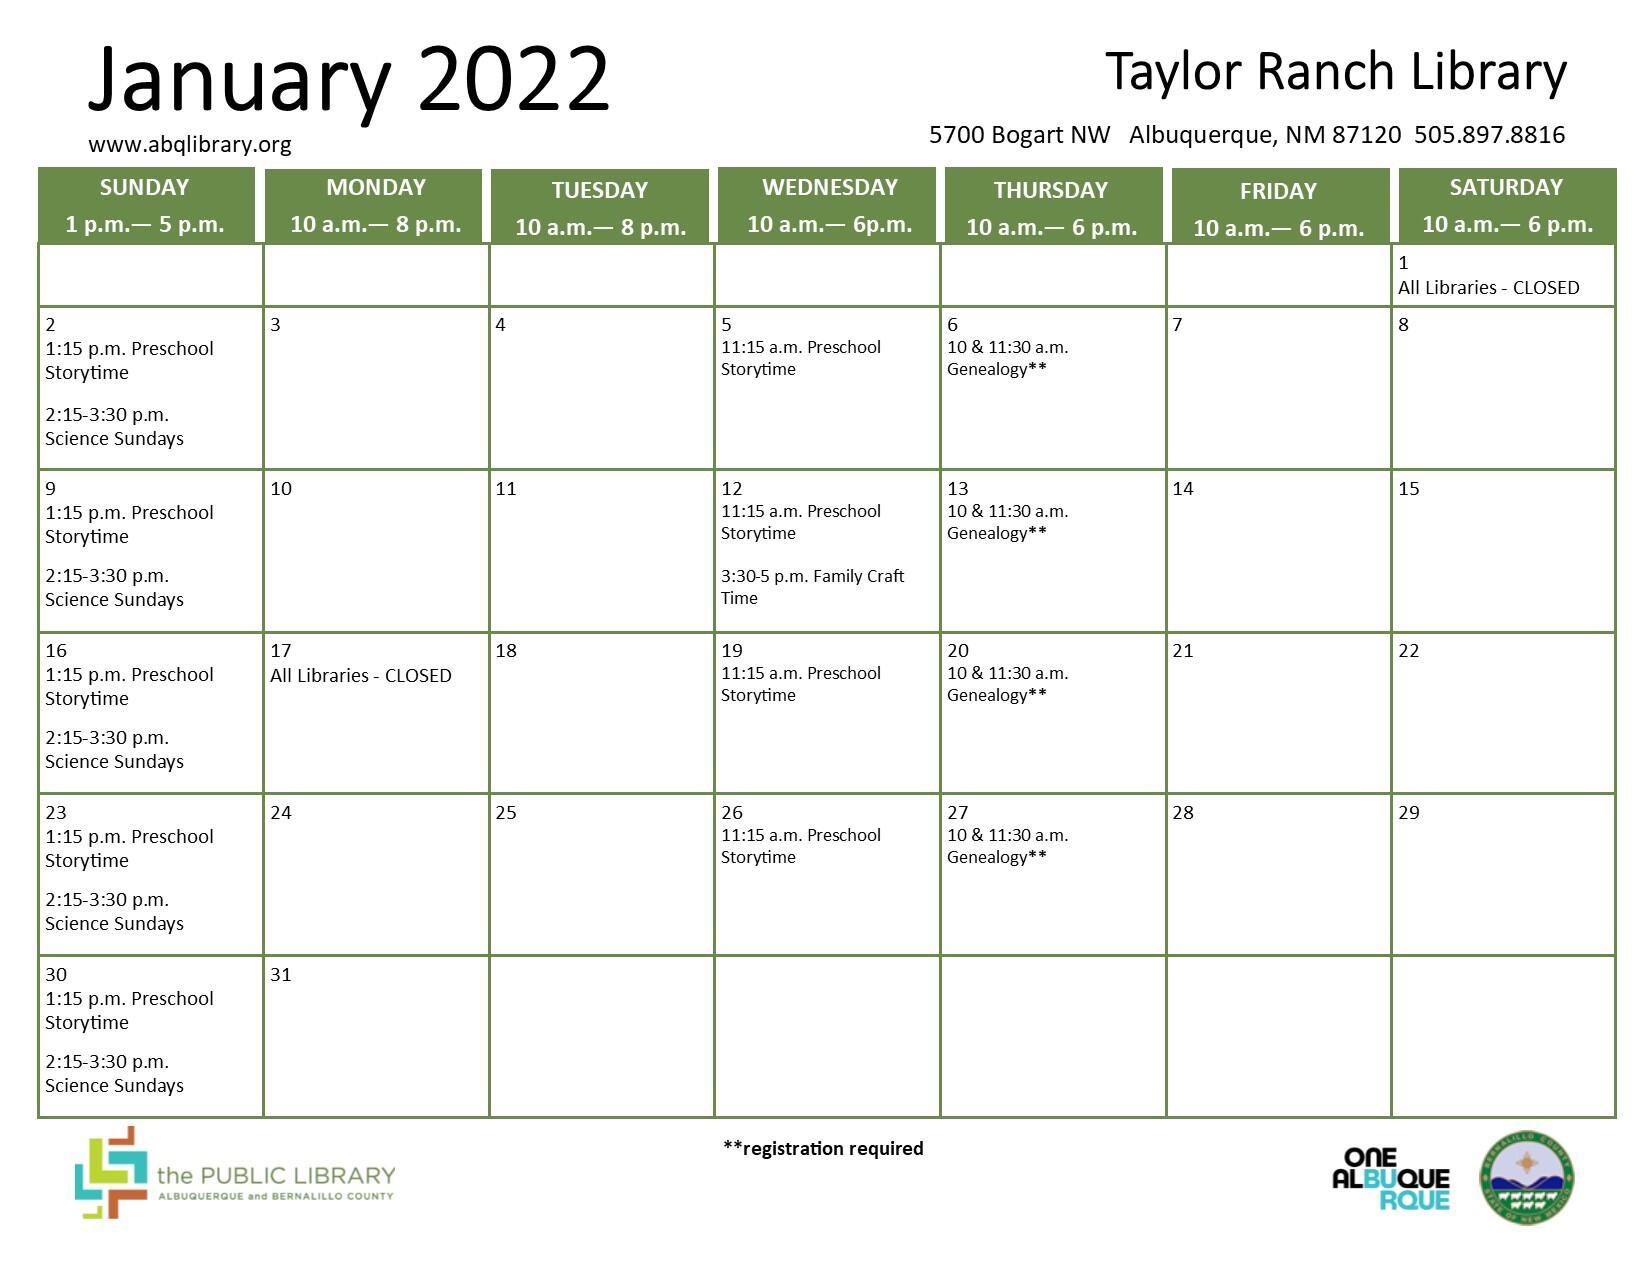 Taylor Ranch Library, January 2022 Calendar & Programs (City of